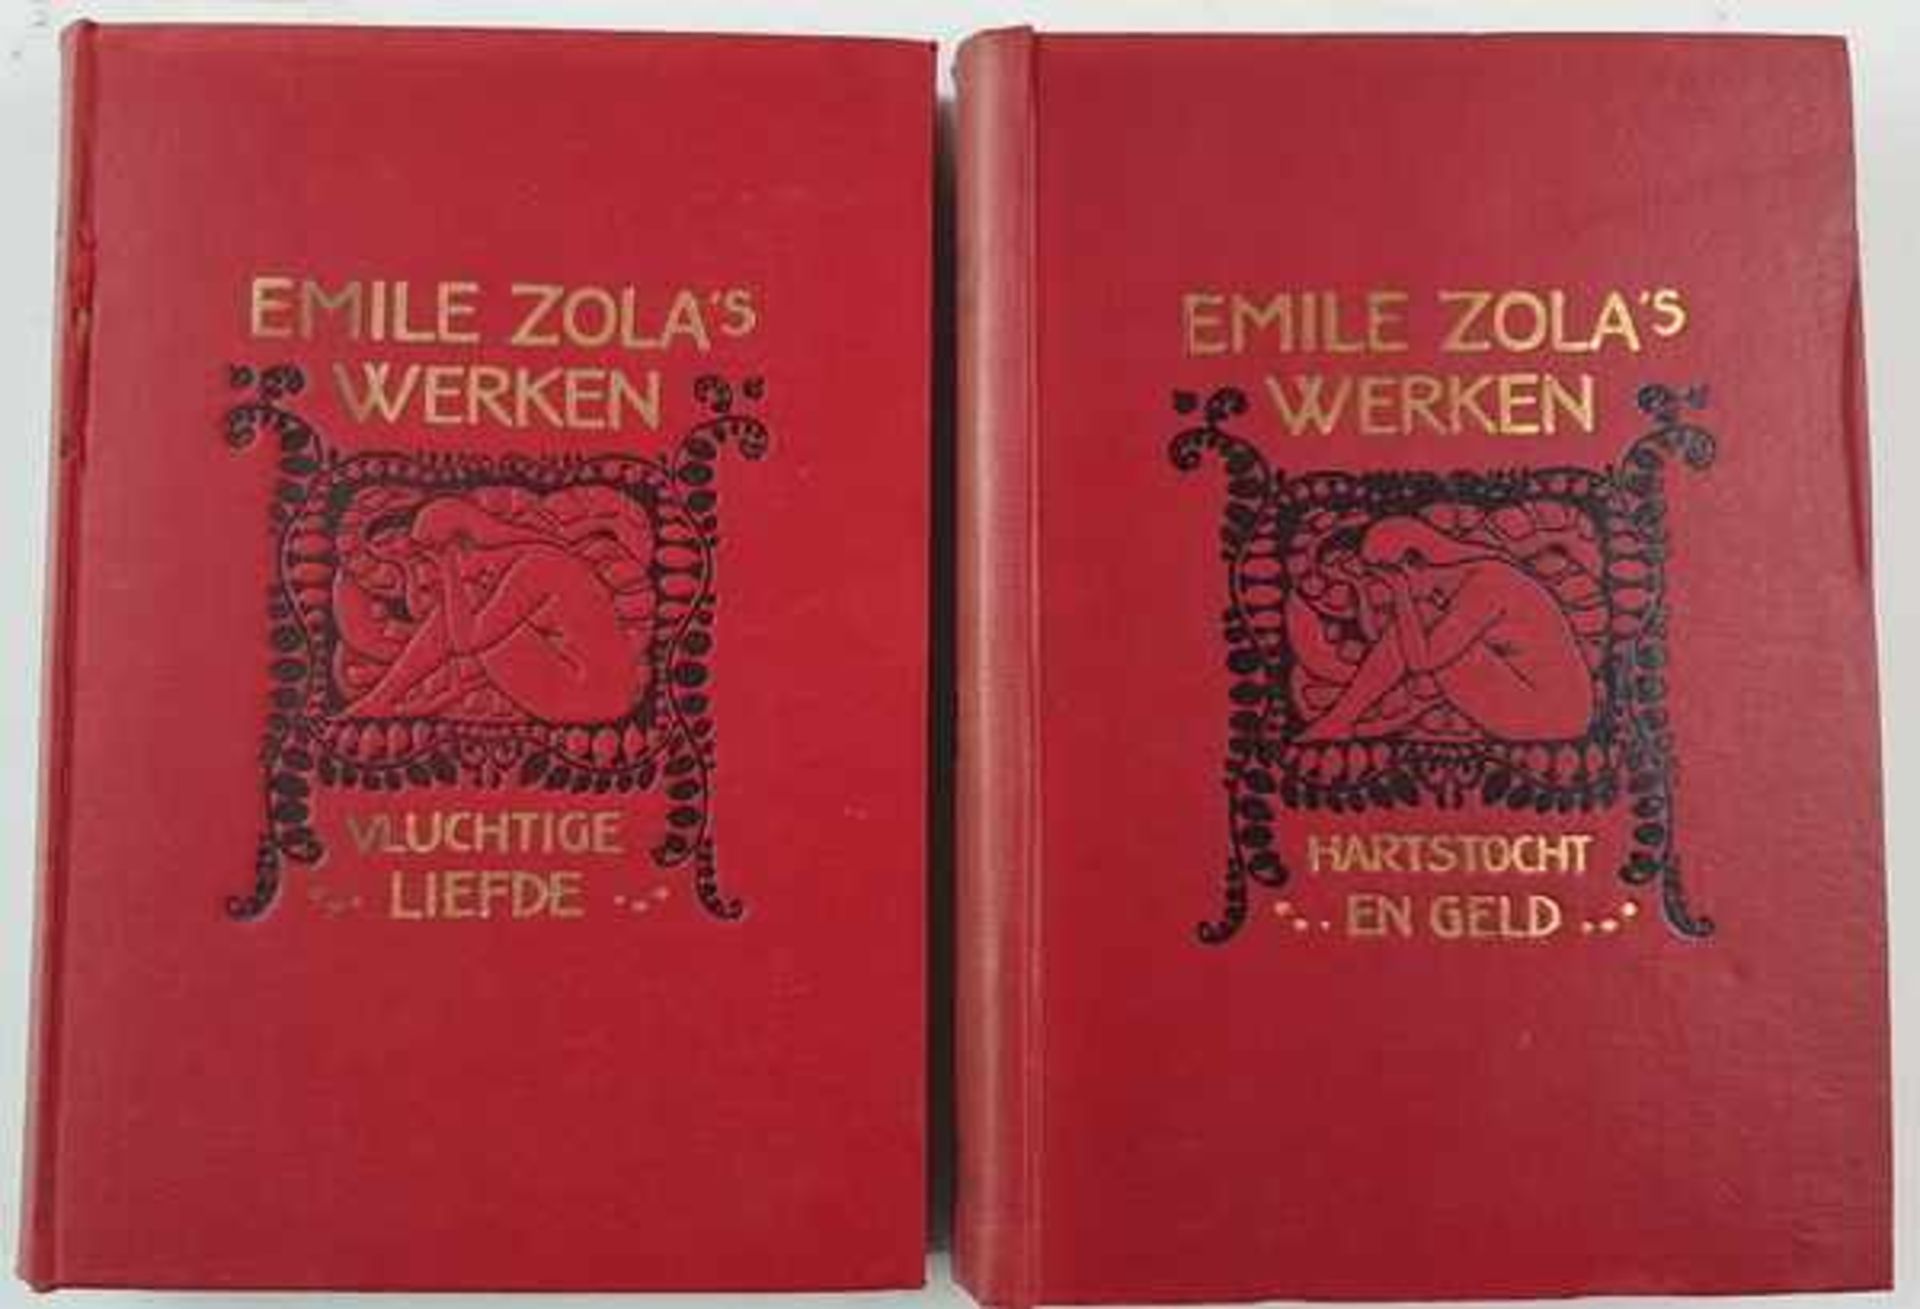 (Boeken) (Literatuur) - Emile Zola's werkenEmile Zola - Emile Zola's Werken. Serie Rougon- - Image 3 of 7